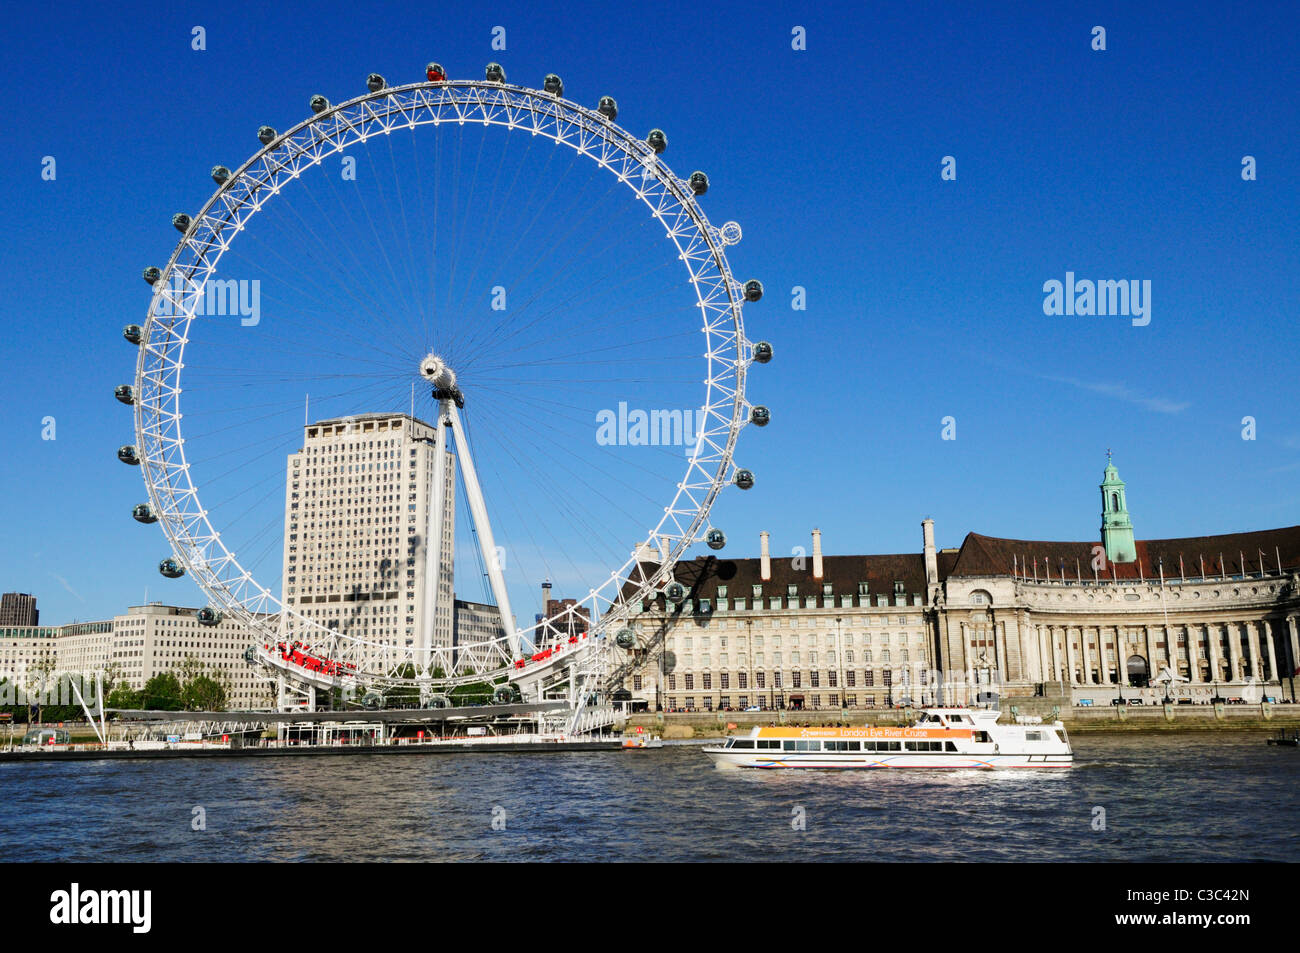 Ein touristisches Sightseeing Cruise Boot am London Eye, London, England, UK Stockfoto